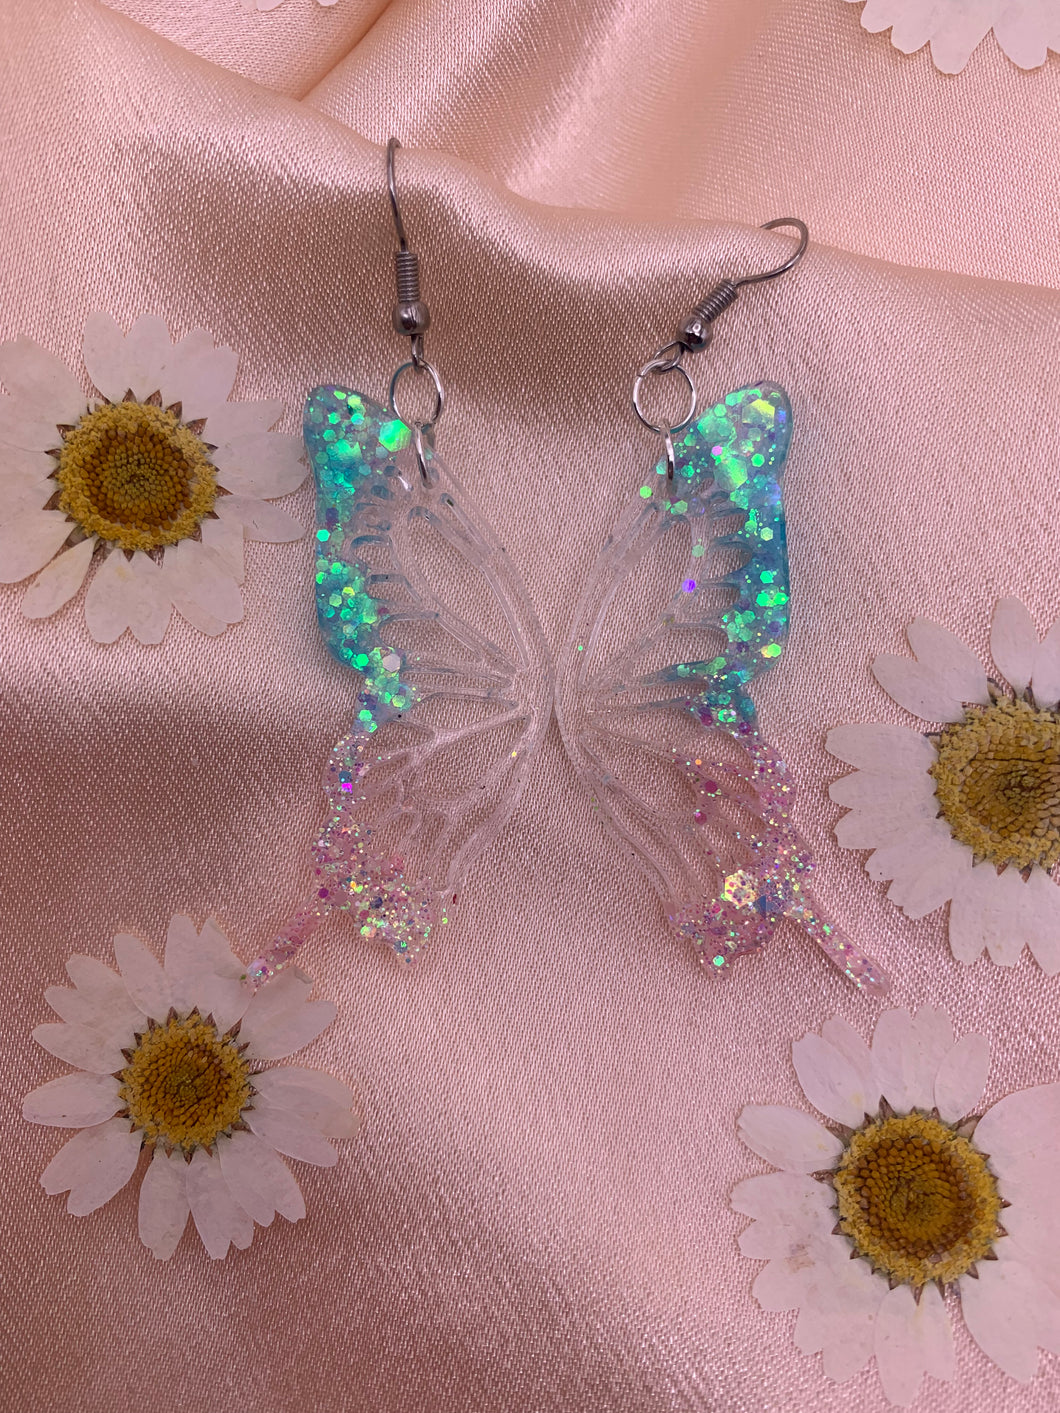 Blue to pink butterfly wing earrings